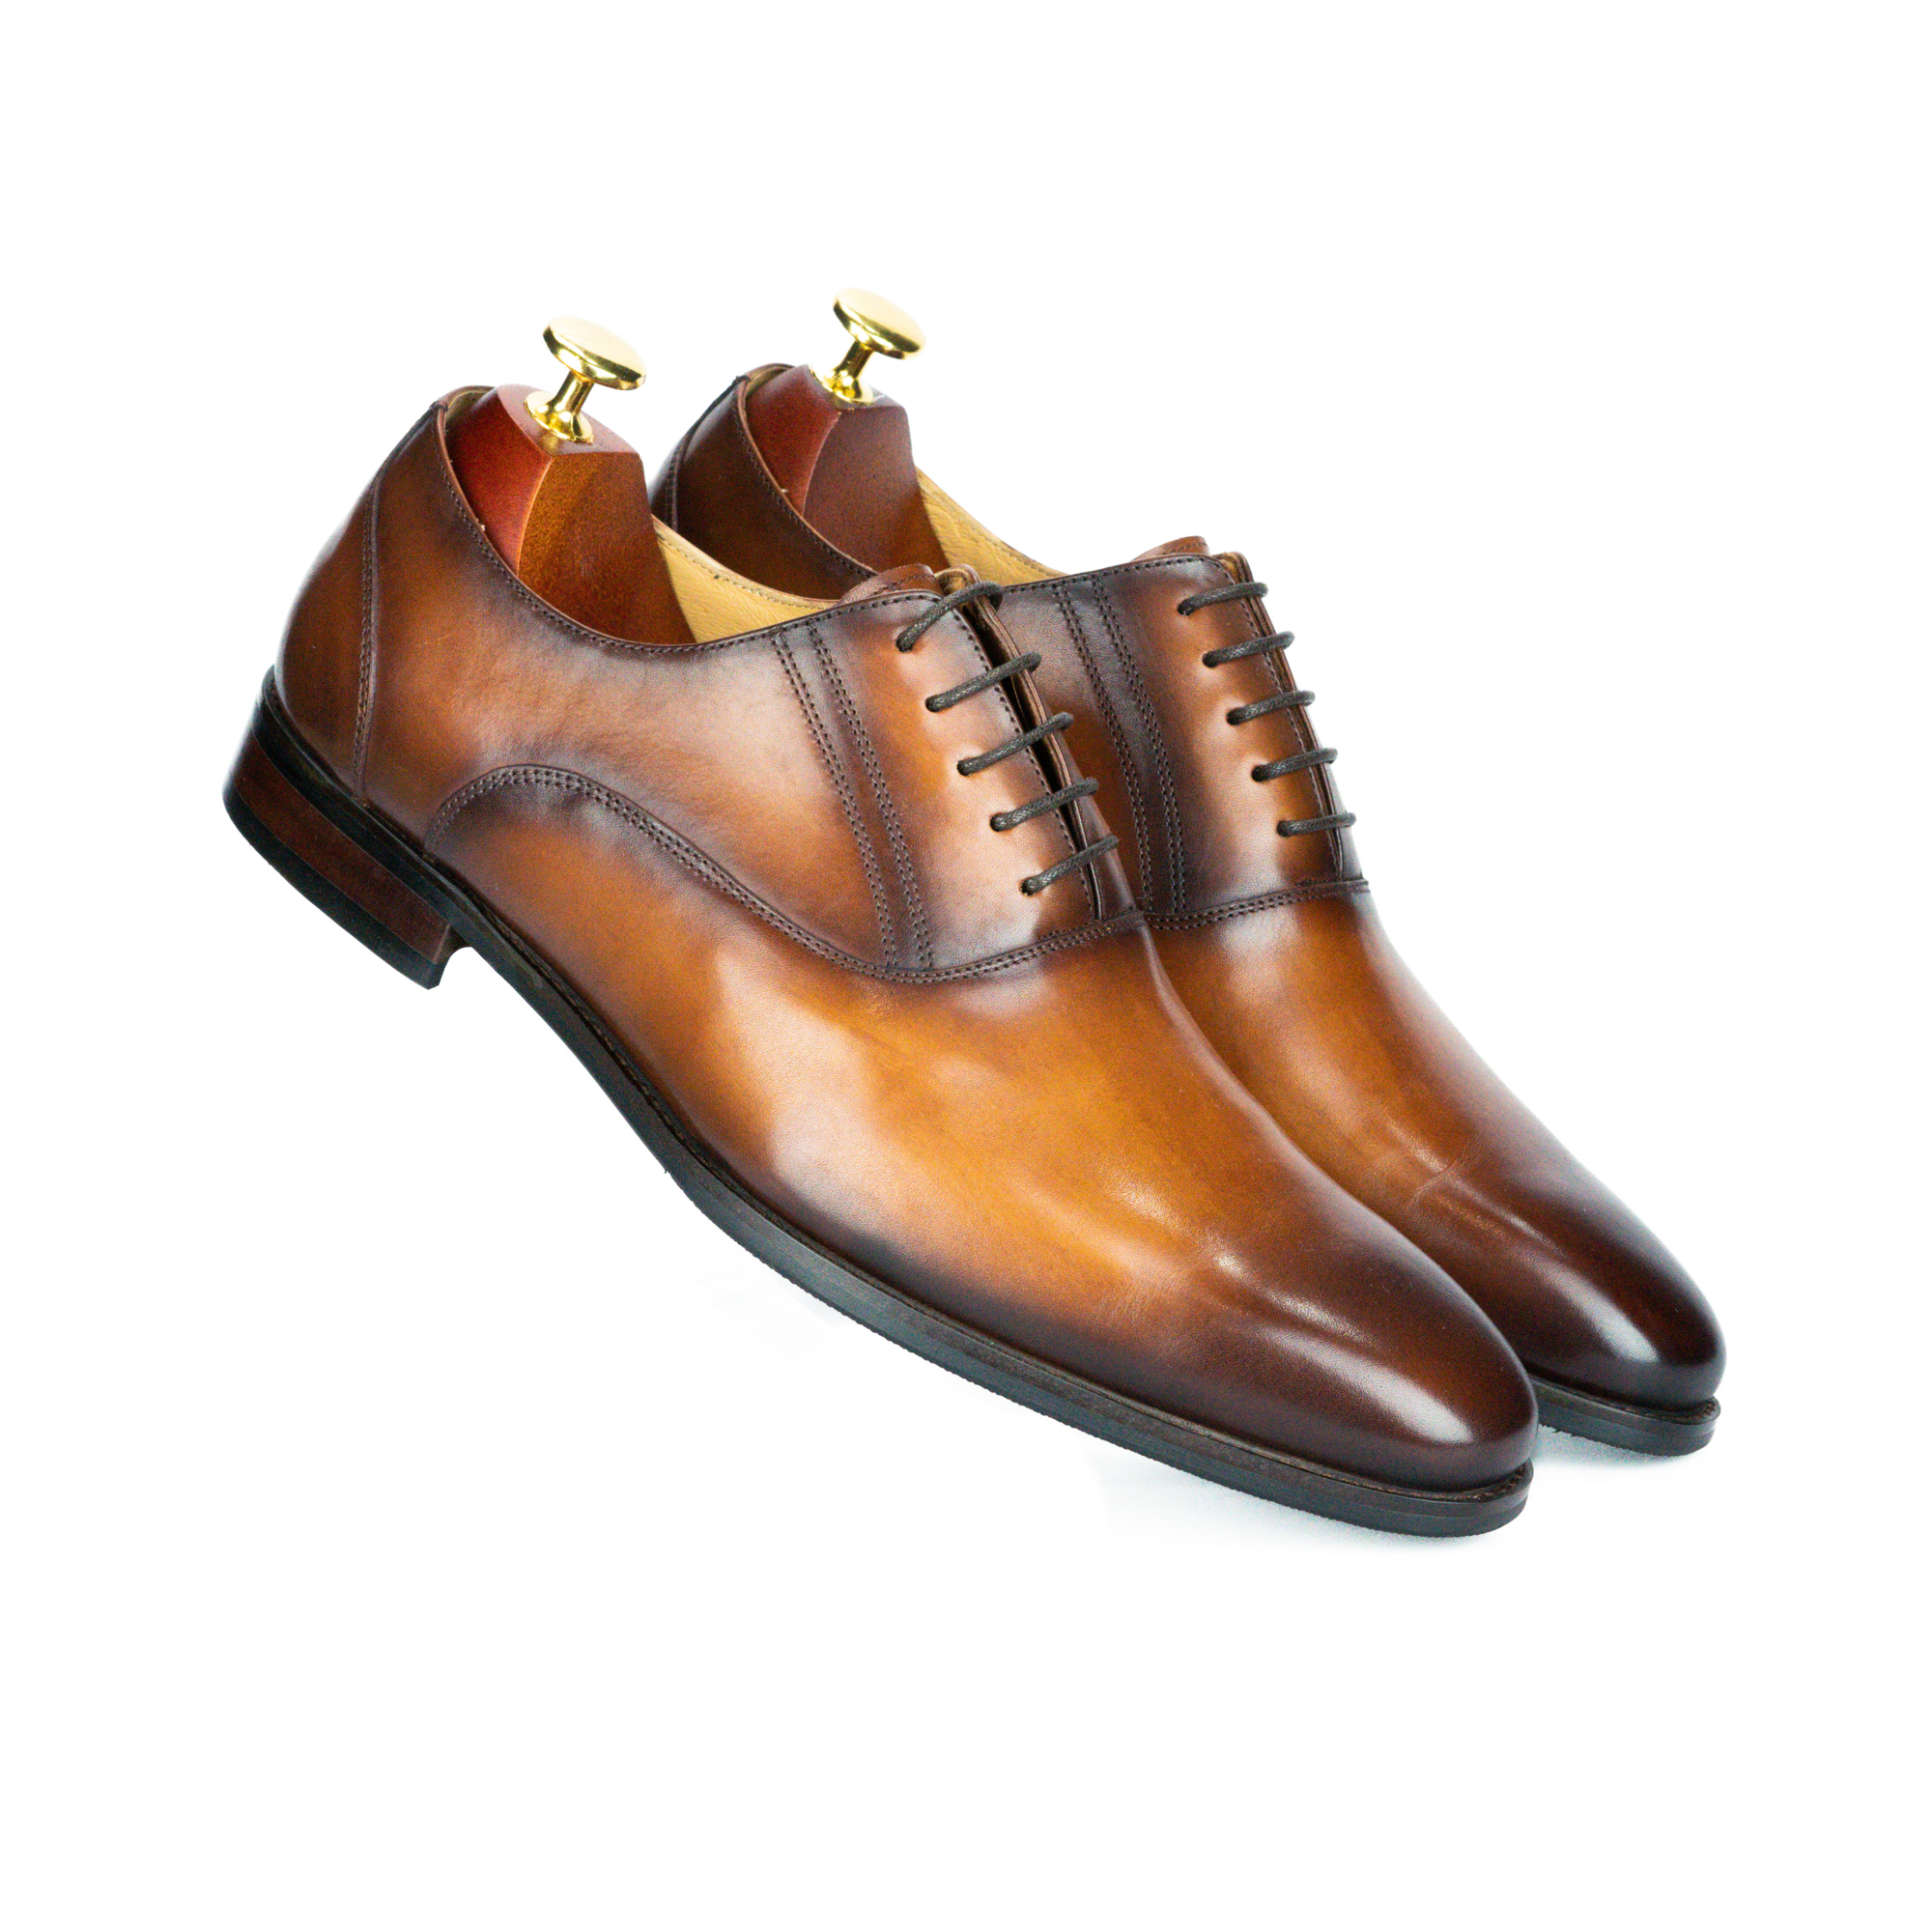 House Oxford Tan - Affordable Customer Shoe Adelaide, SA